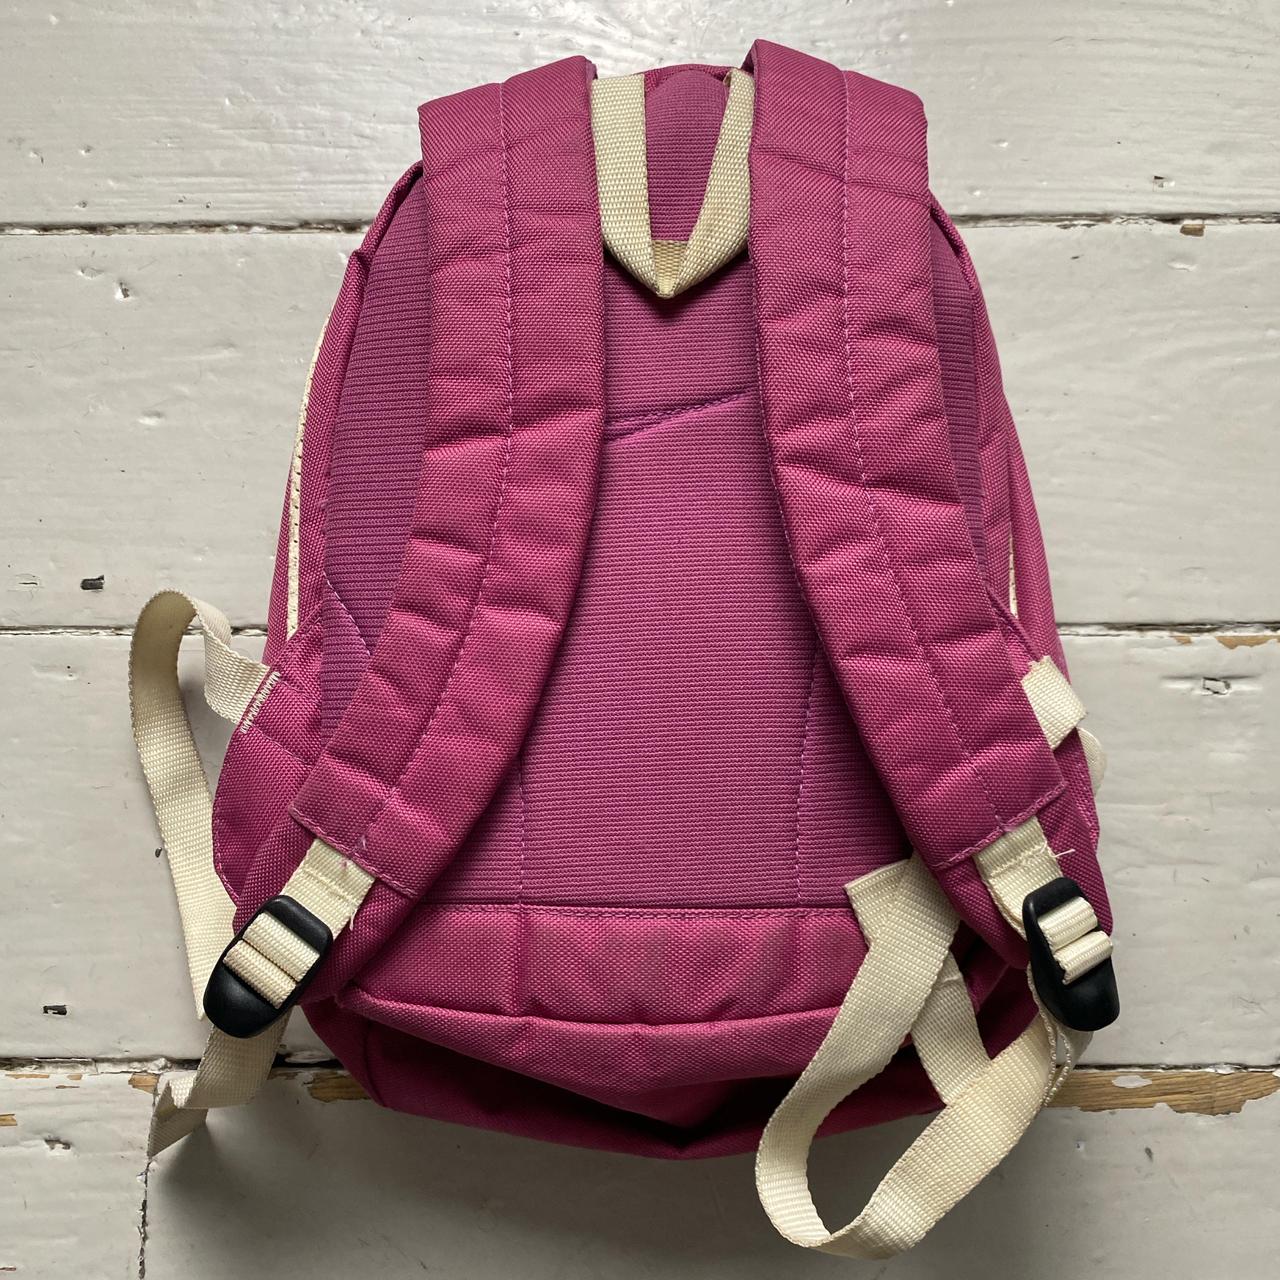 Nike Vintage Pink and White Swoosh Backpack Bag